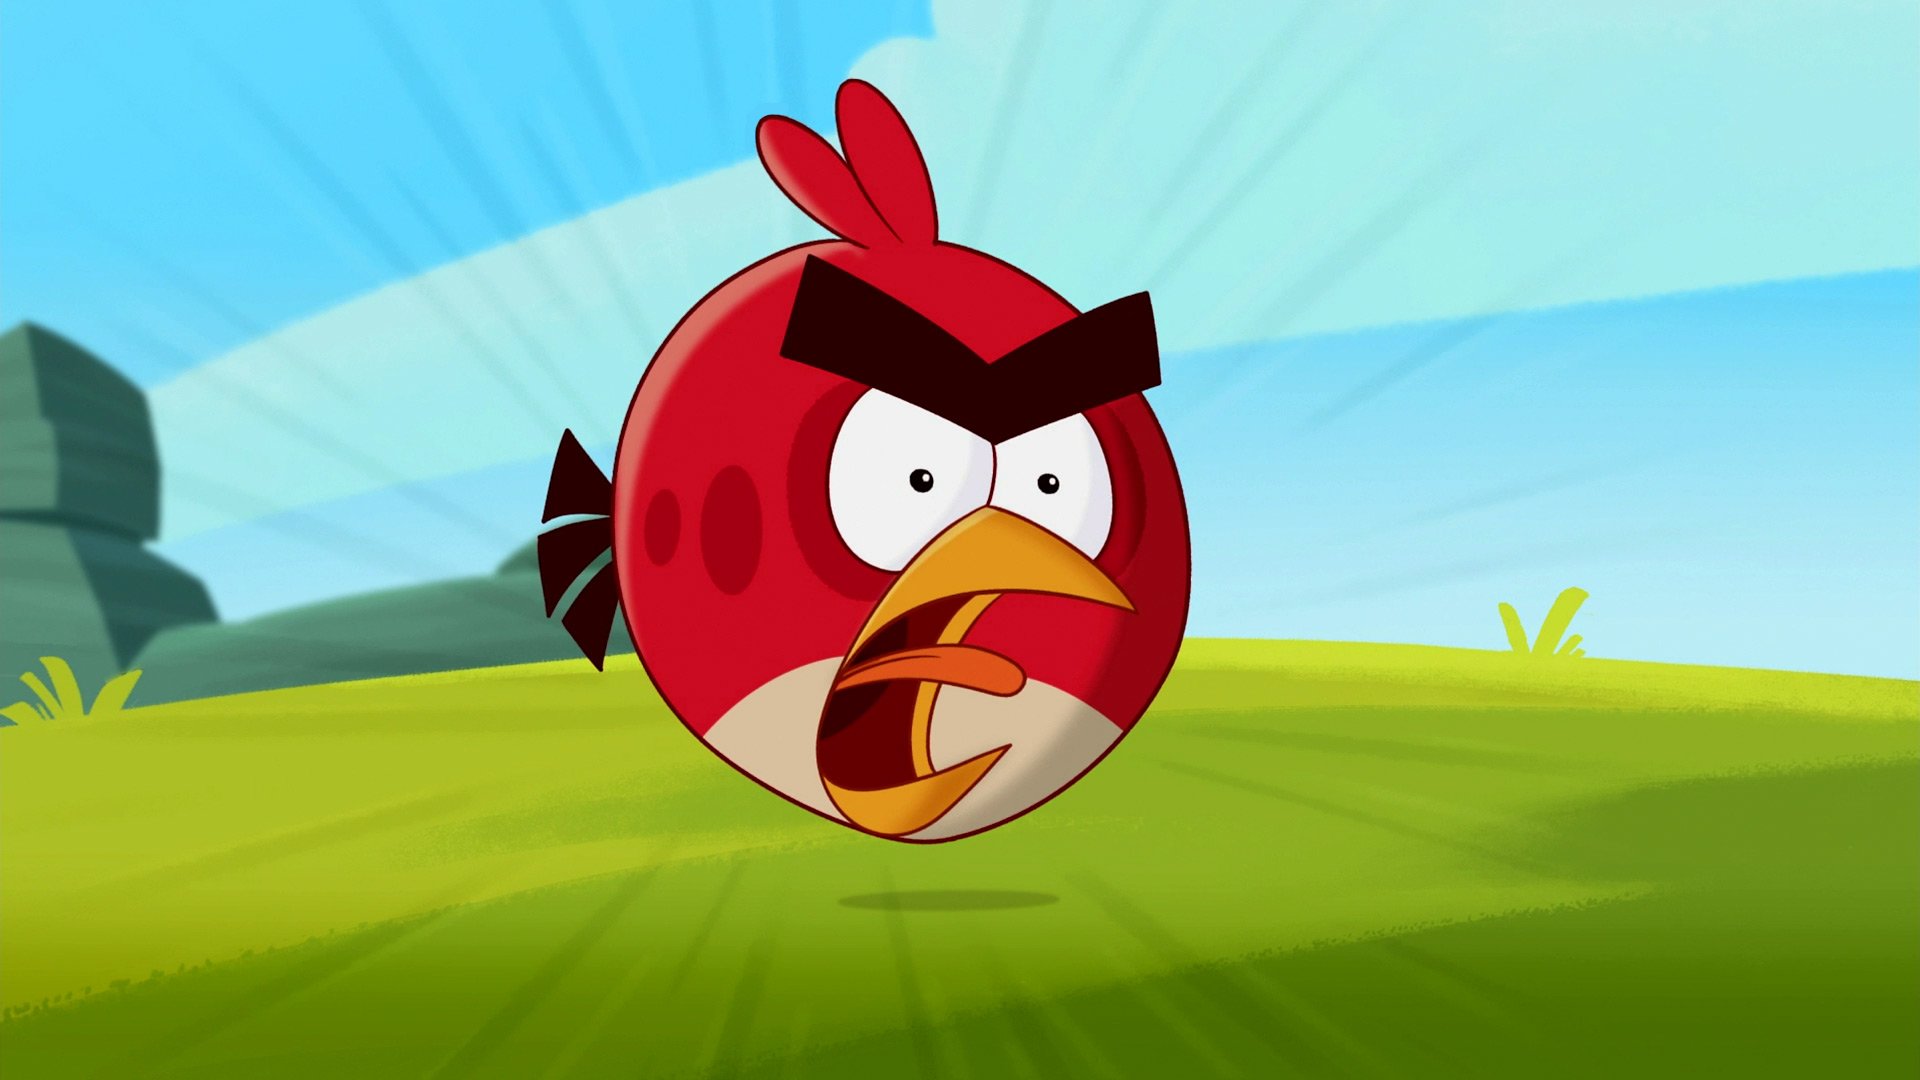 lucu dan keren gambar angry bird